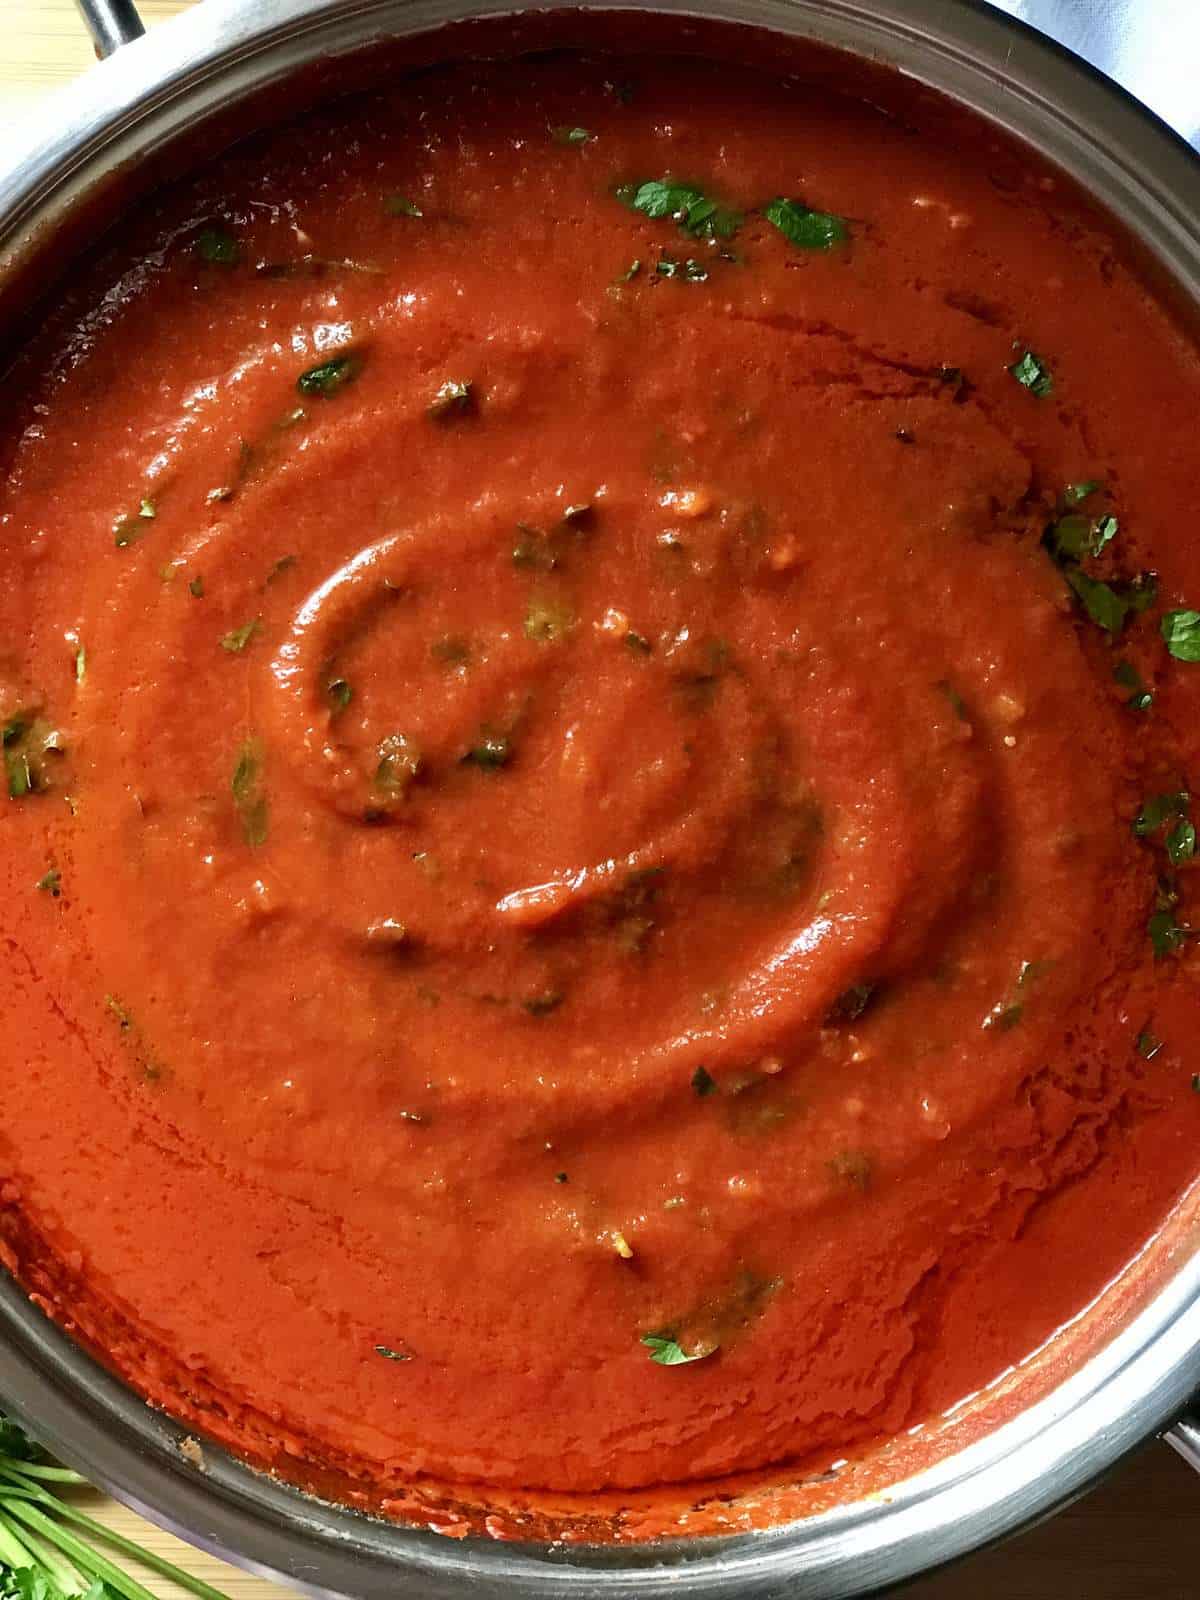 A large saucepan of tomato sauce.